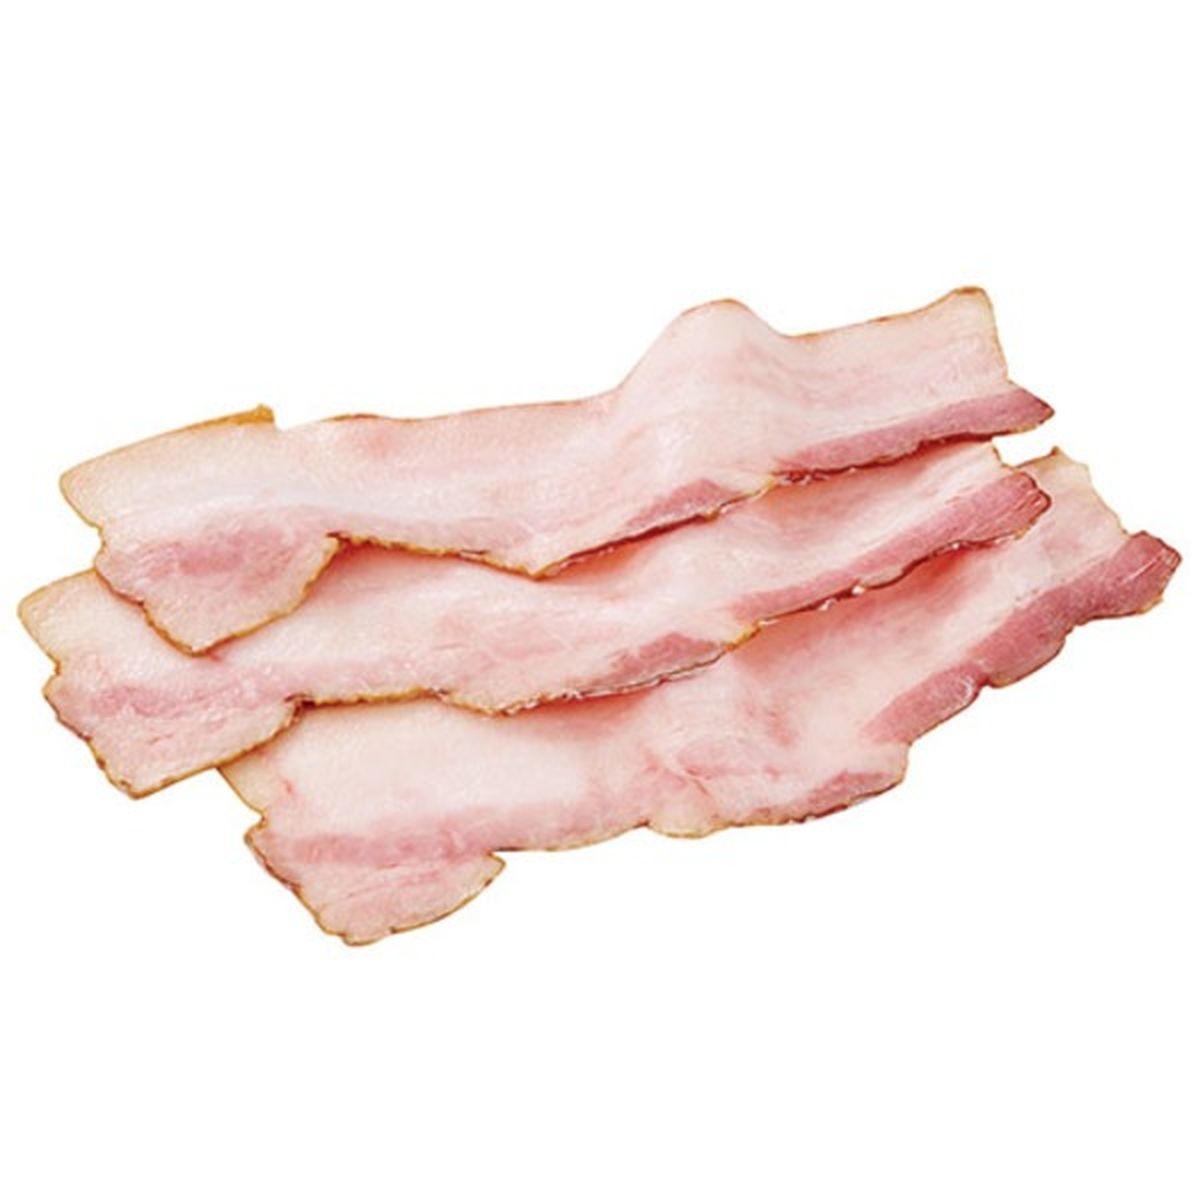 Calories in Josef's Delicatessen Hickory Smoked Bacon